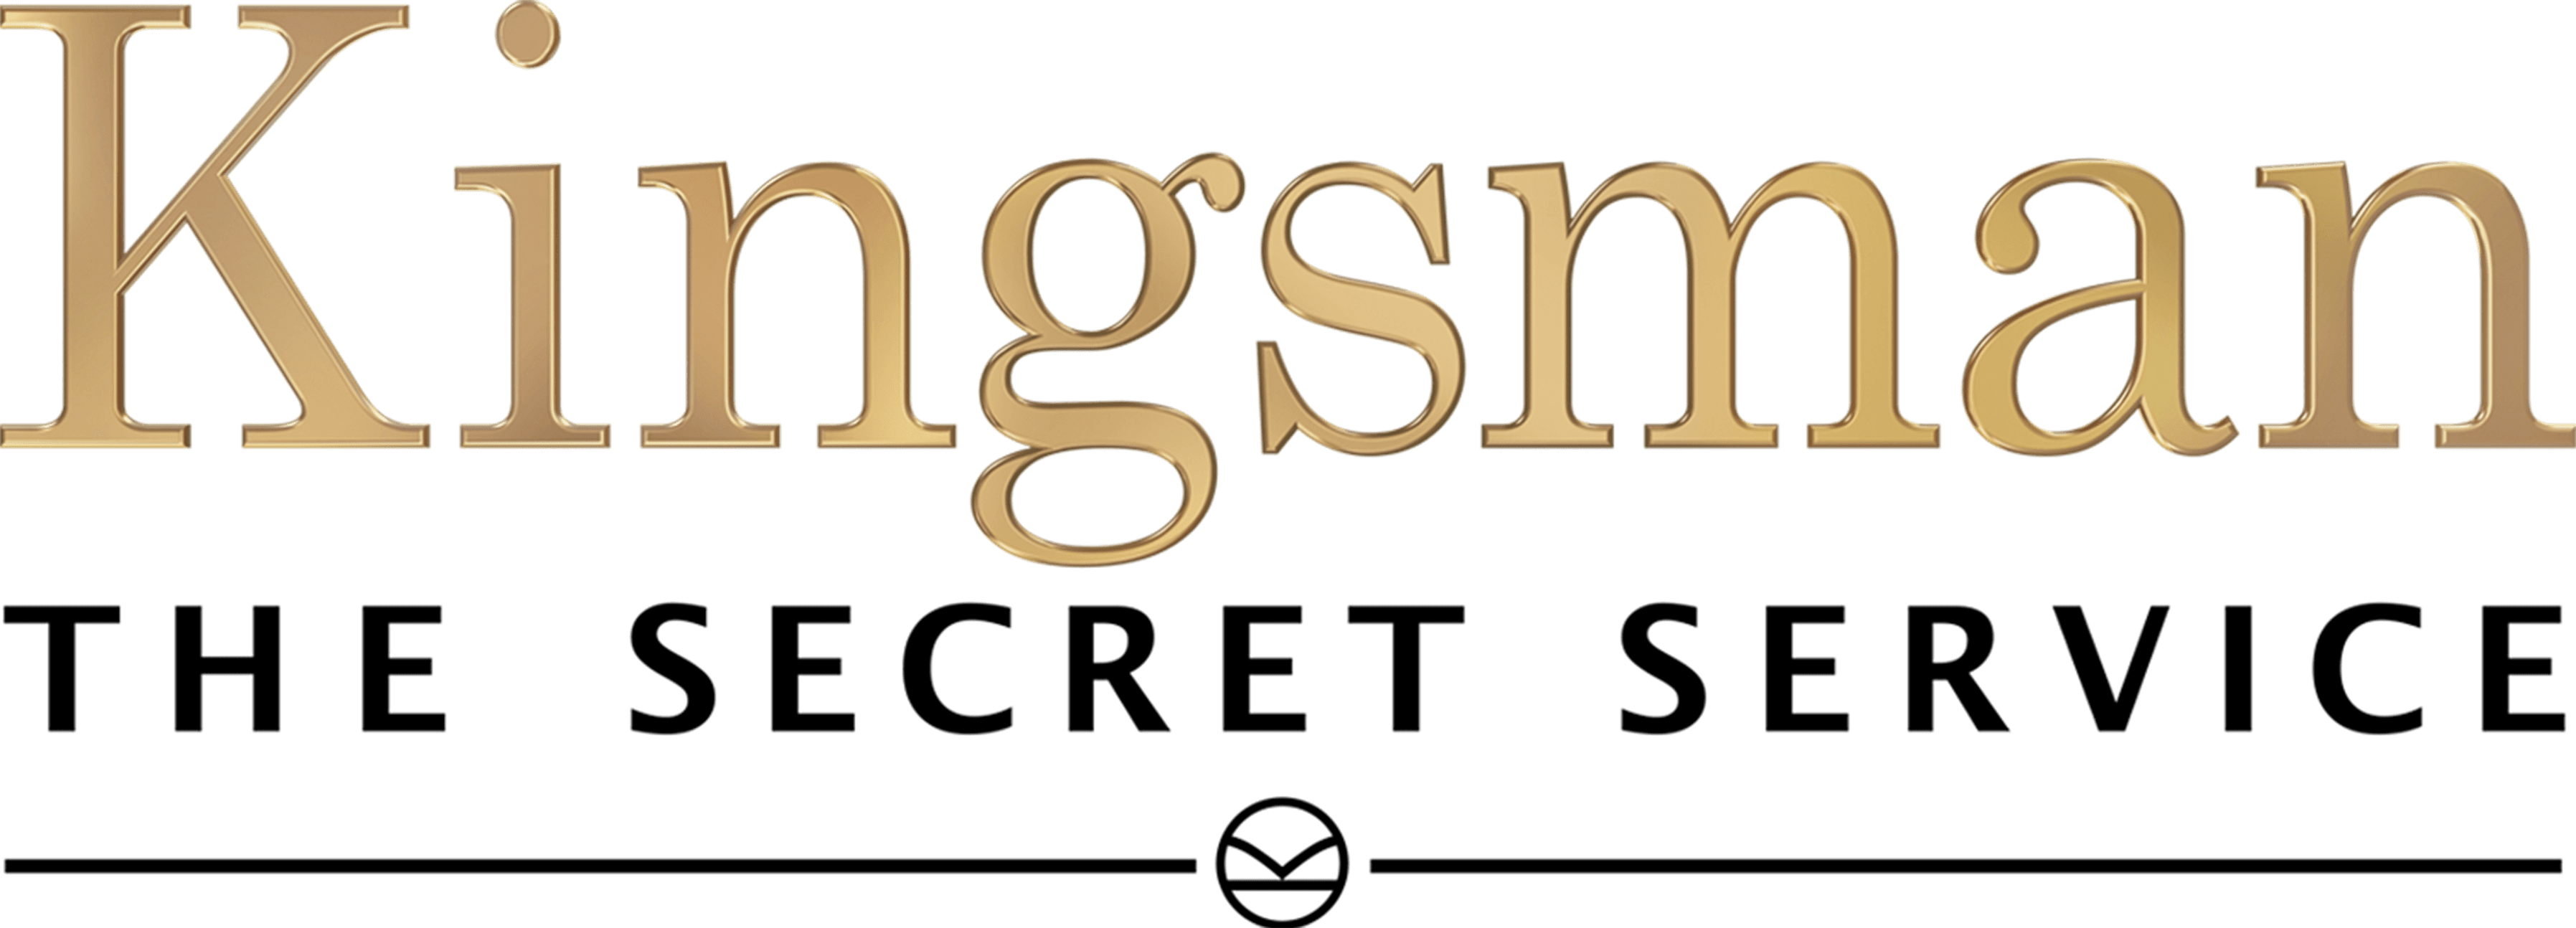 Kingsman: The Secret Service logo